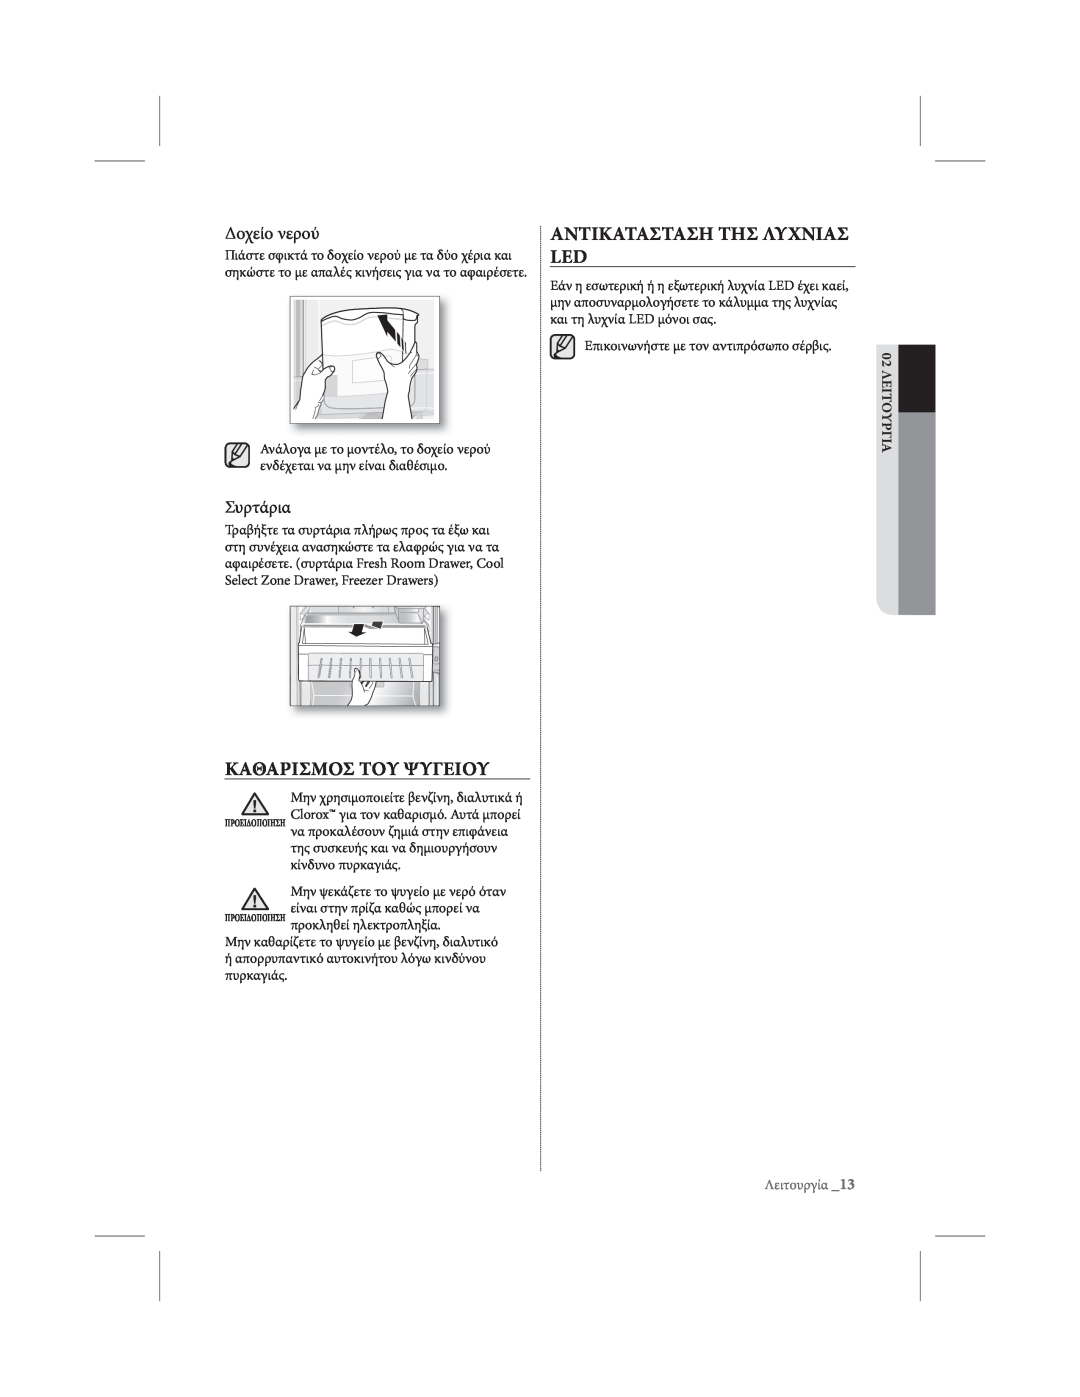 Samsung RL39THCTS1/EUR manual Καθαρισμοσ Του Ψυγειου, Αντικατασταση Τησ Λυχνιασ Led, ̀ϨϮϞϾϨϦϞϩϨЁ, Συρτάρια, 02 ΛΕΙΤΟΥΡΓΙΑ 